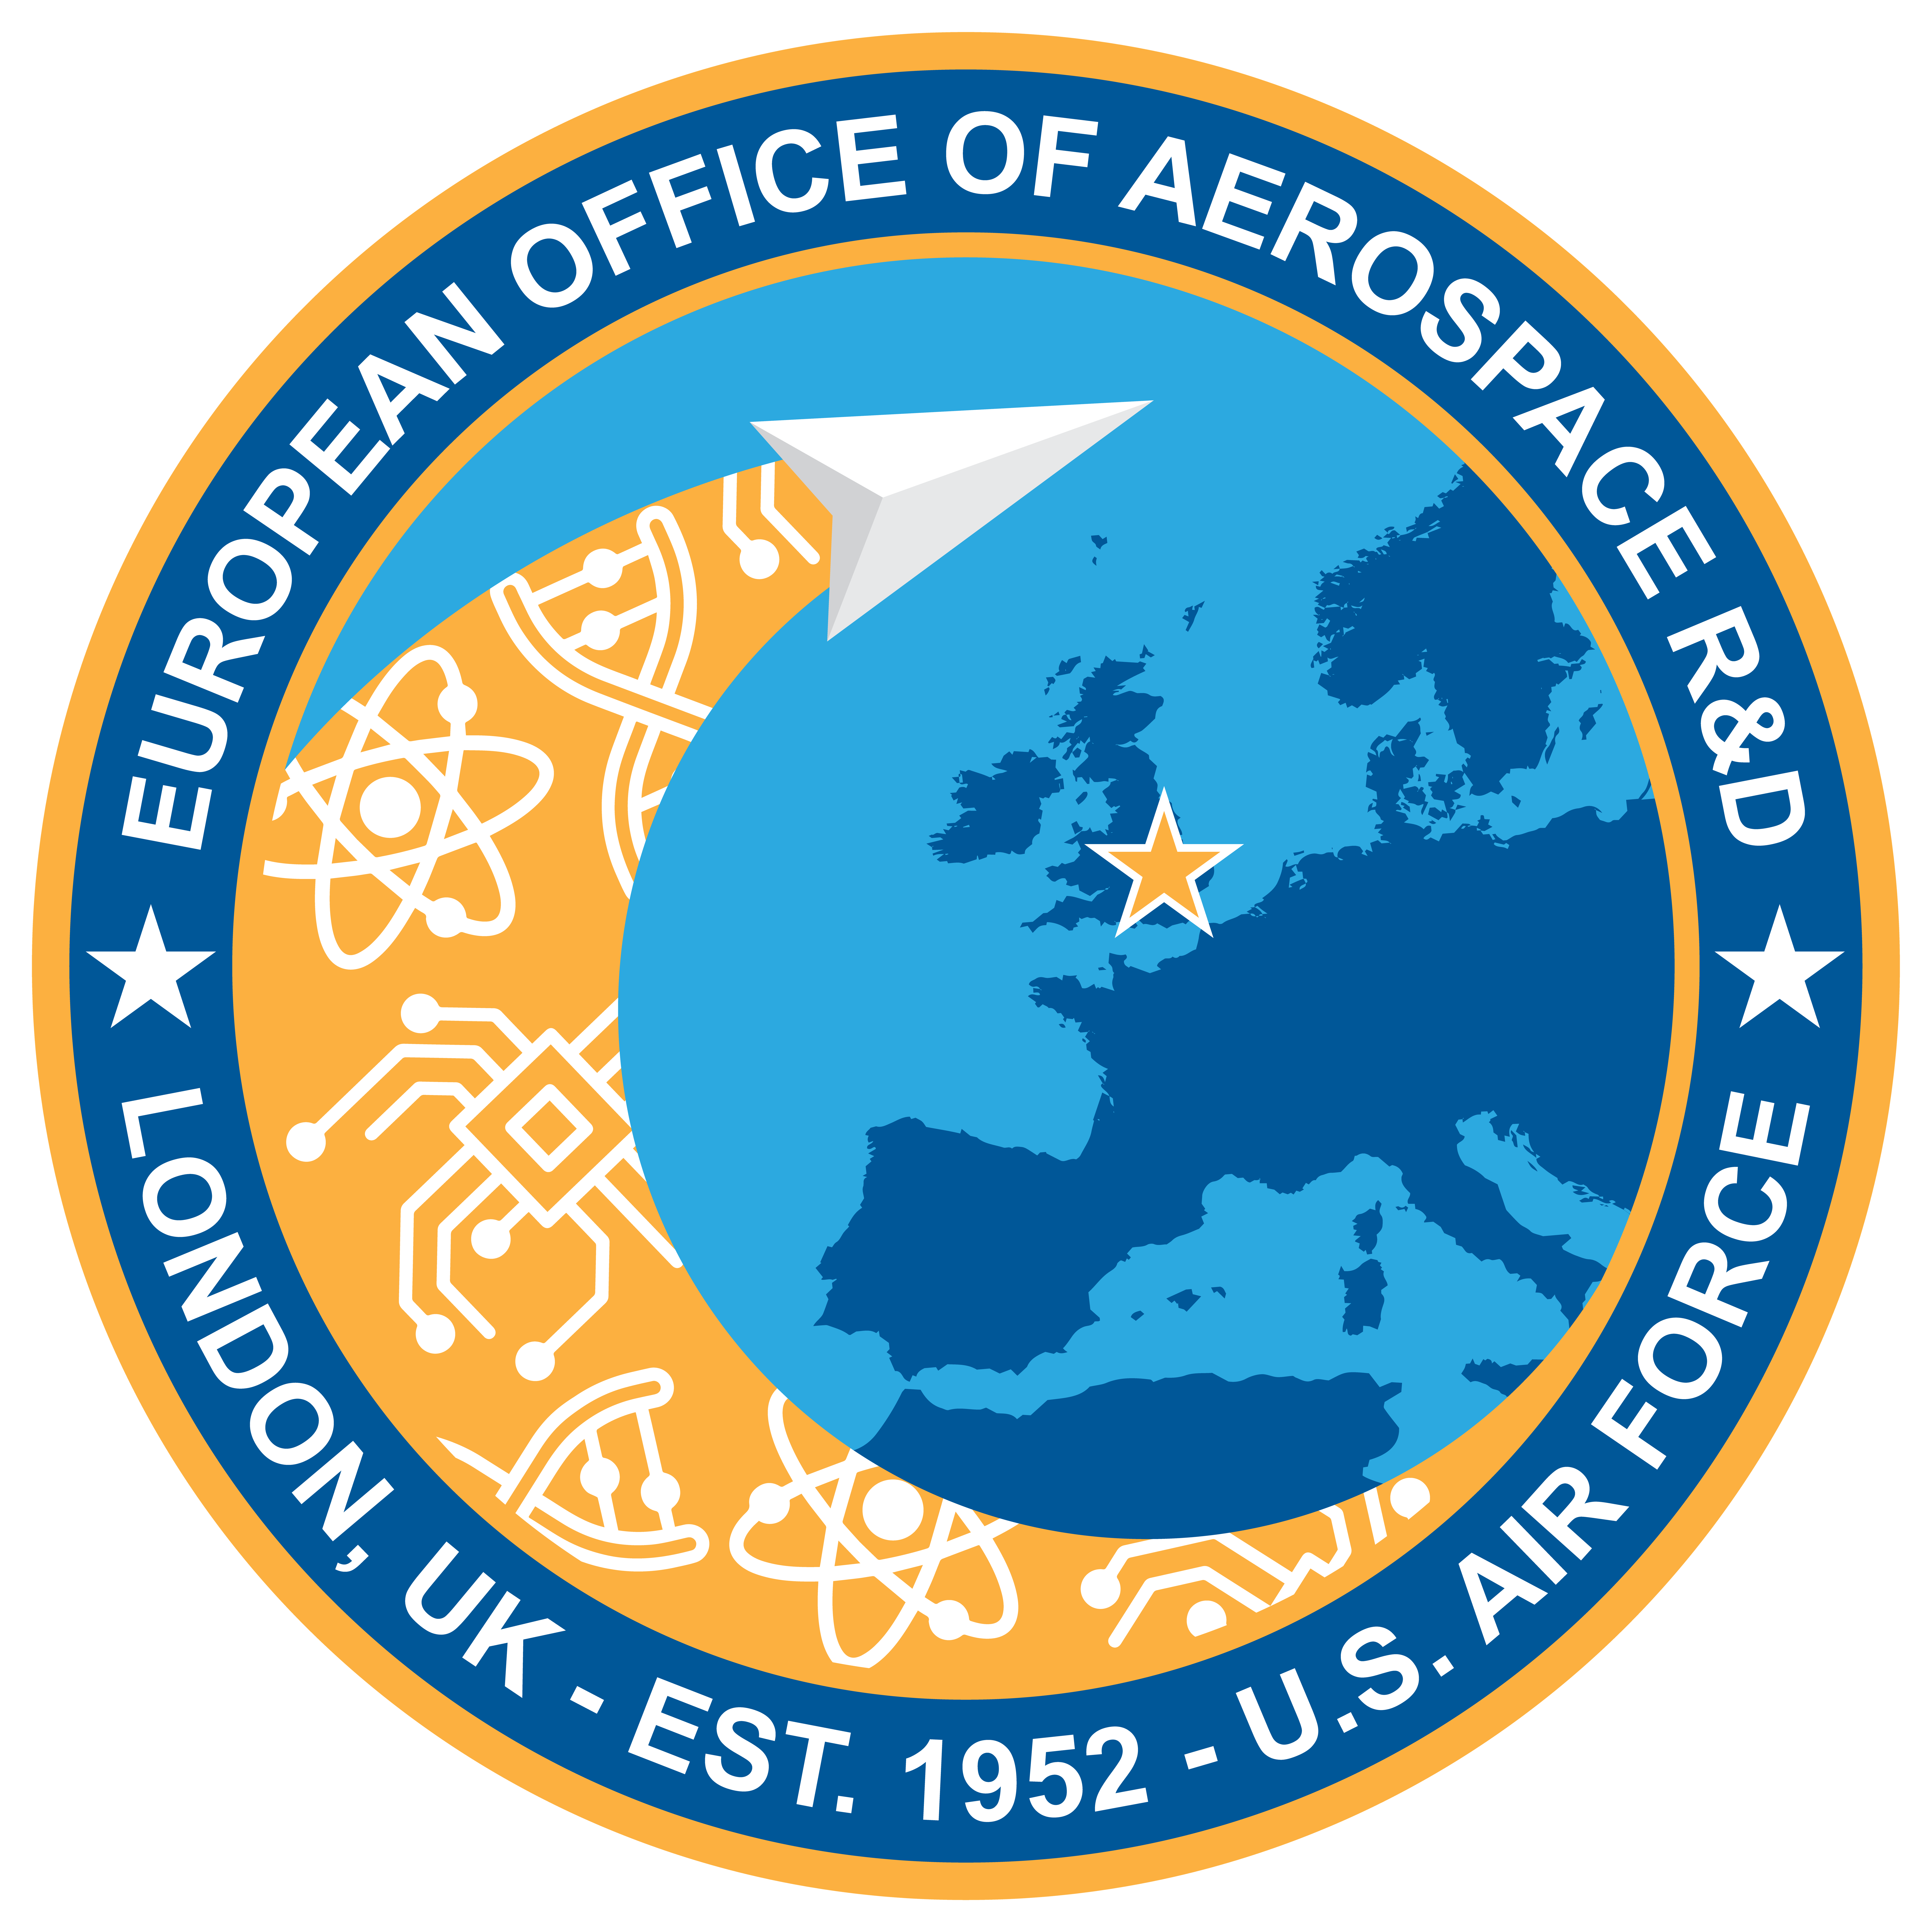 European Office of Aerospace R&D.